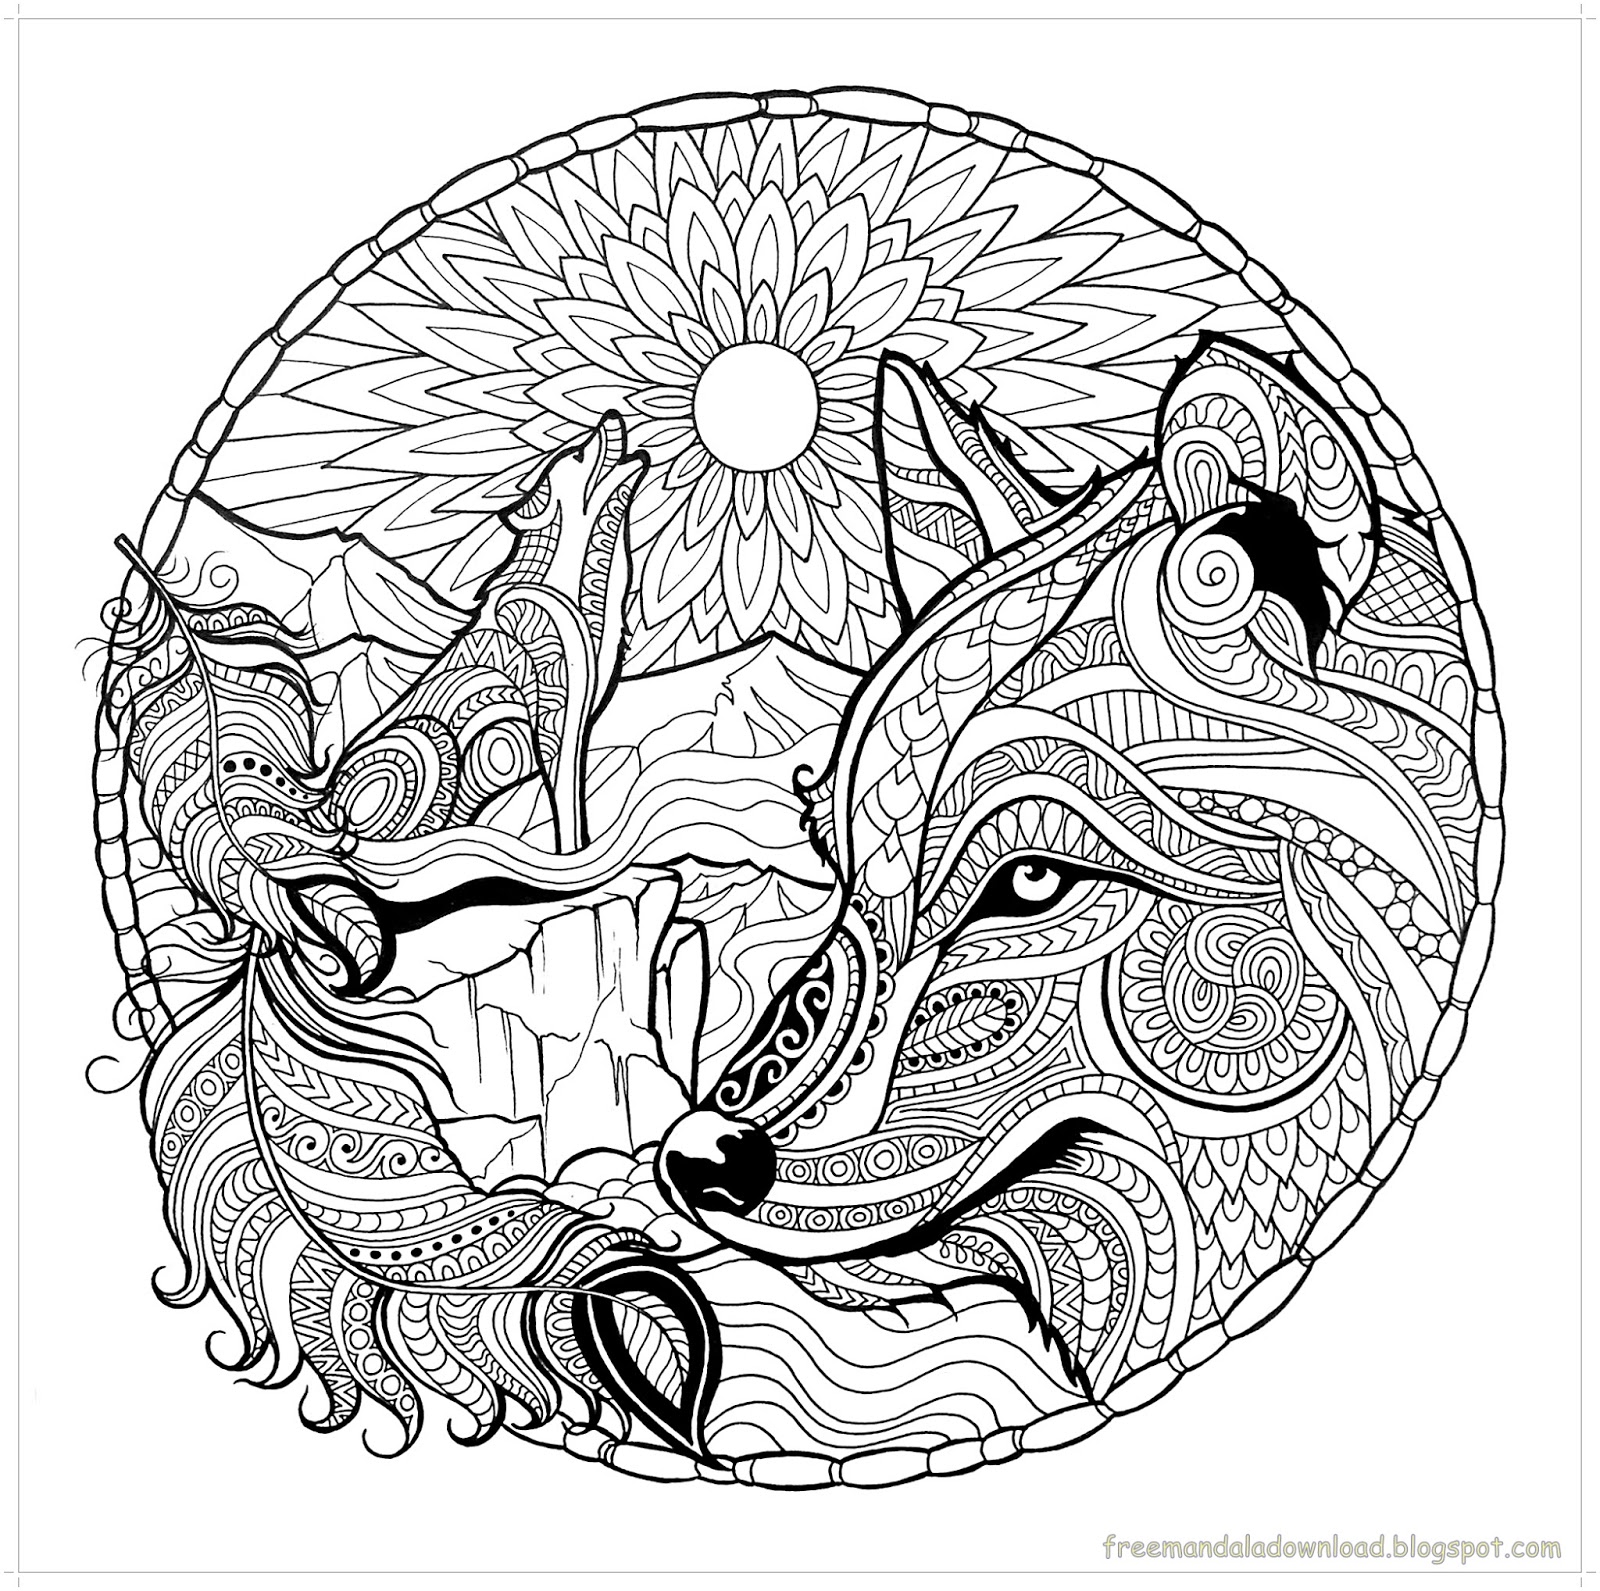 Download Malvorlagen Wolf-Mandala-hohe Qualität/Wolf mandala coloring page high quality - Free Mandala